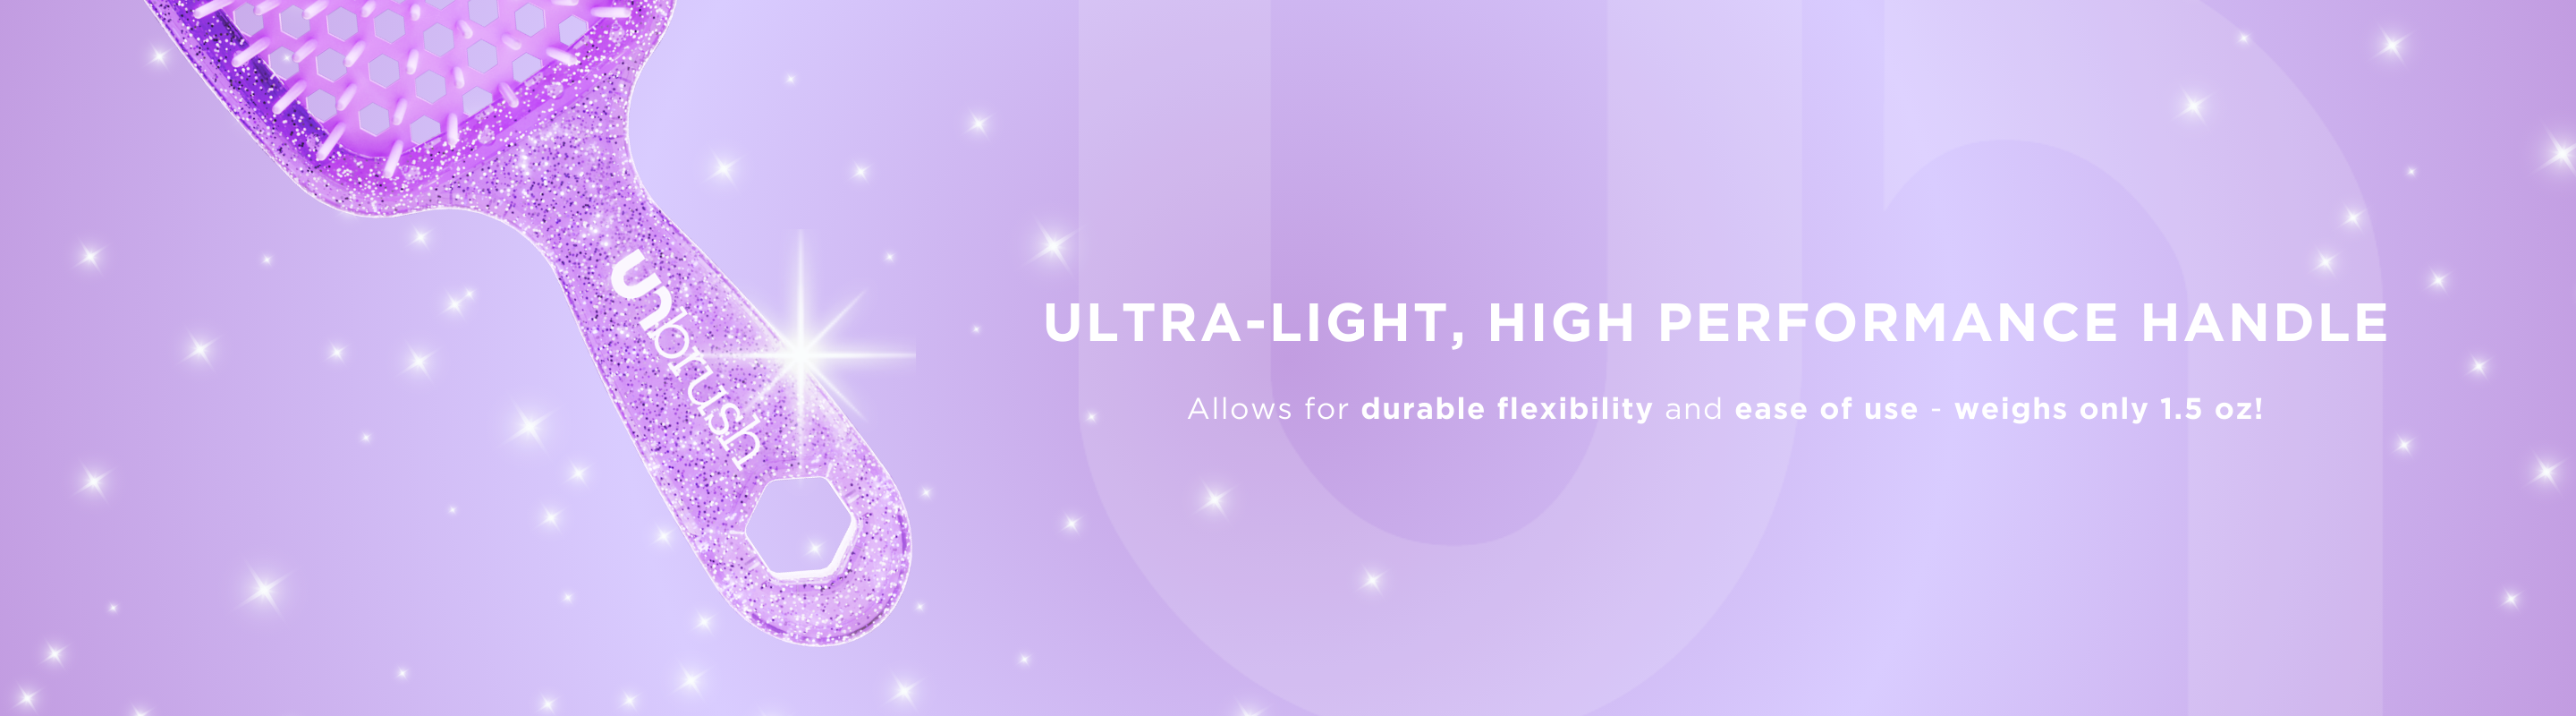 Ultra-light, HIGH PERFORMANCE handle